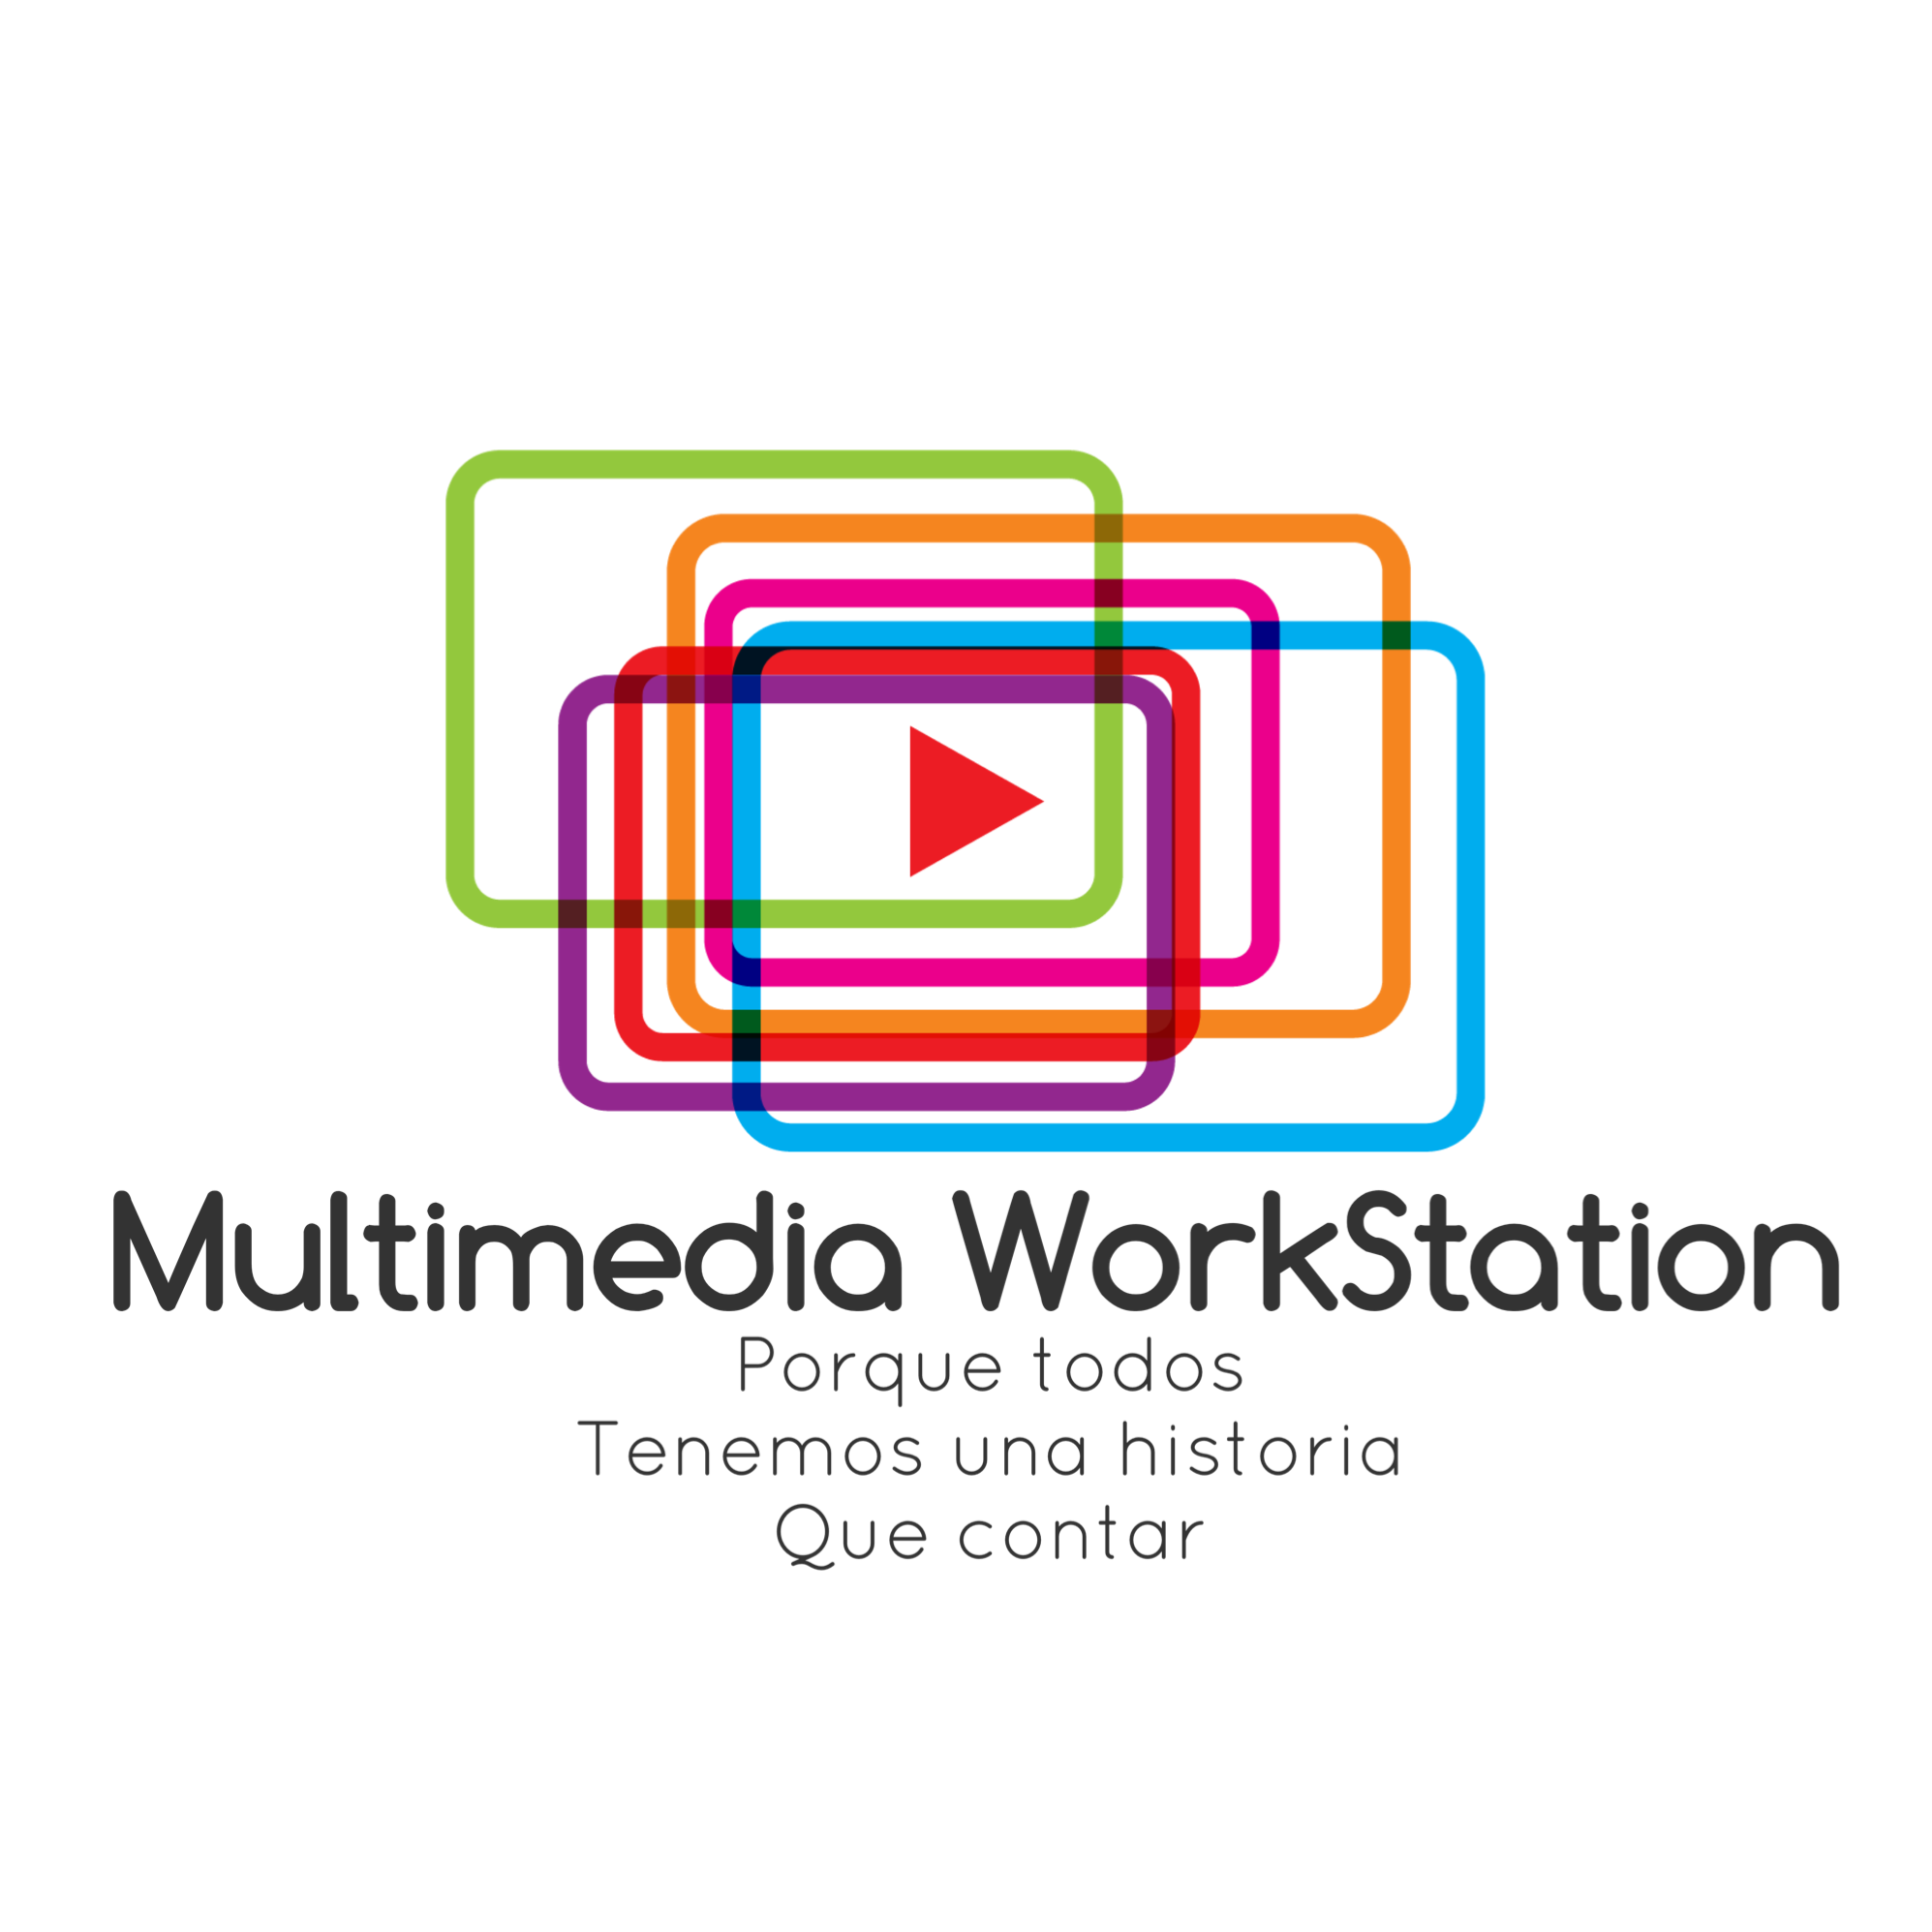 Multimedia WorkStation